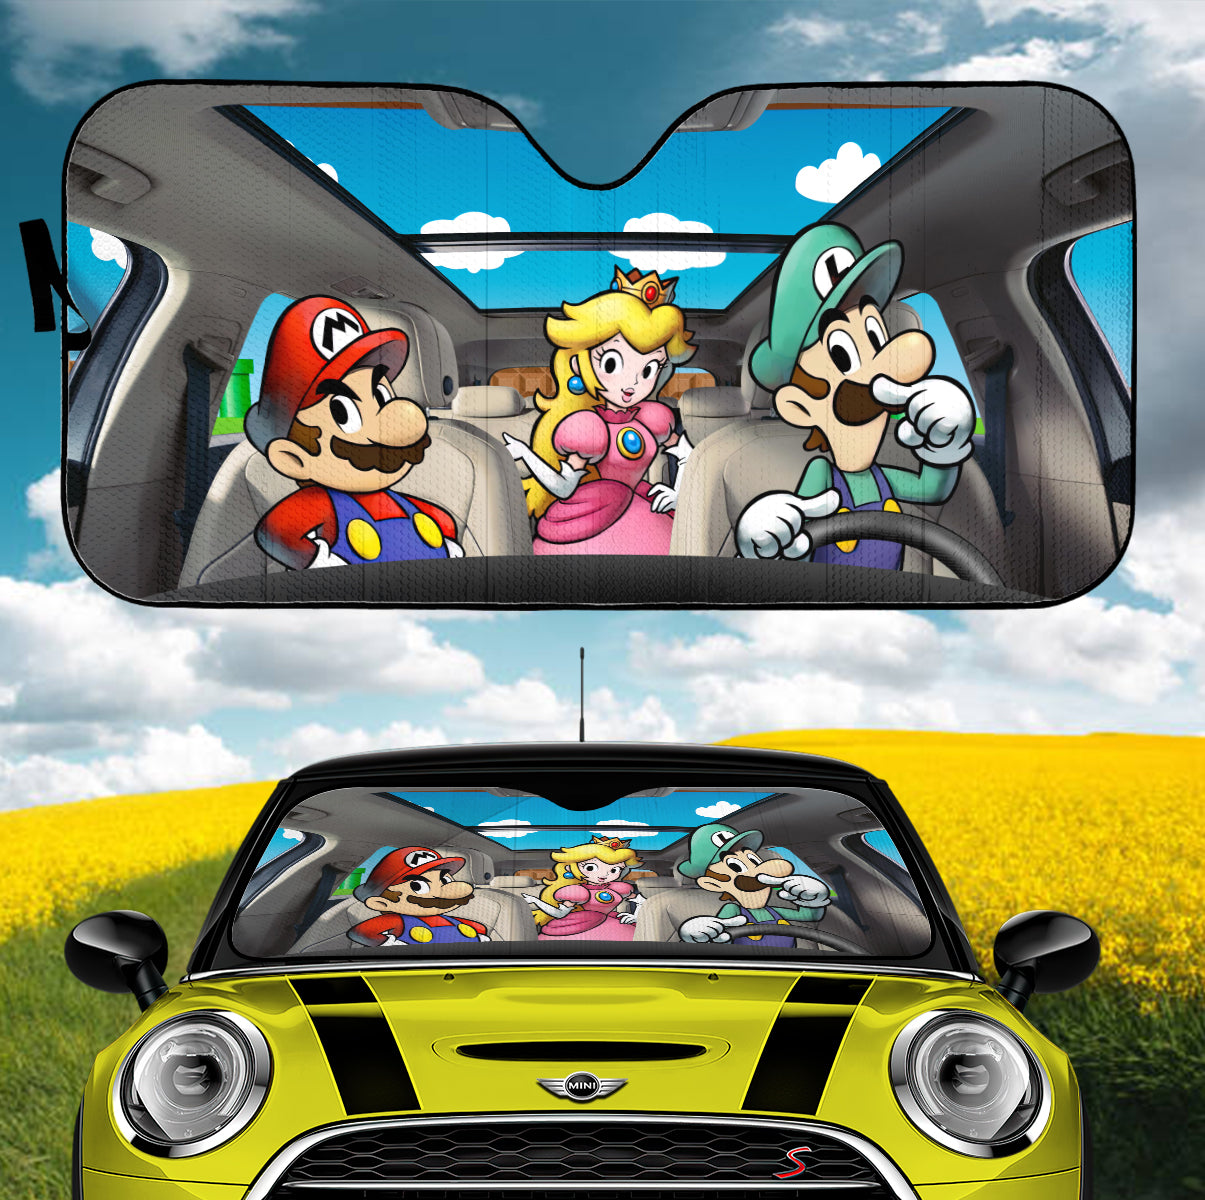 Mario Luigi And Peach Car Auto Sunshades Nearkii